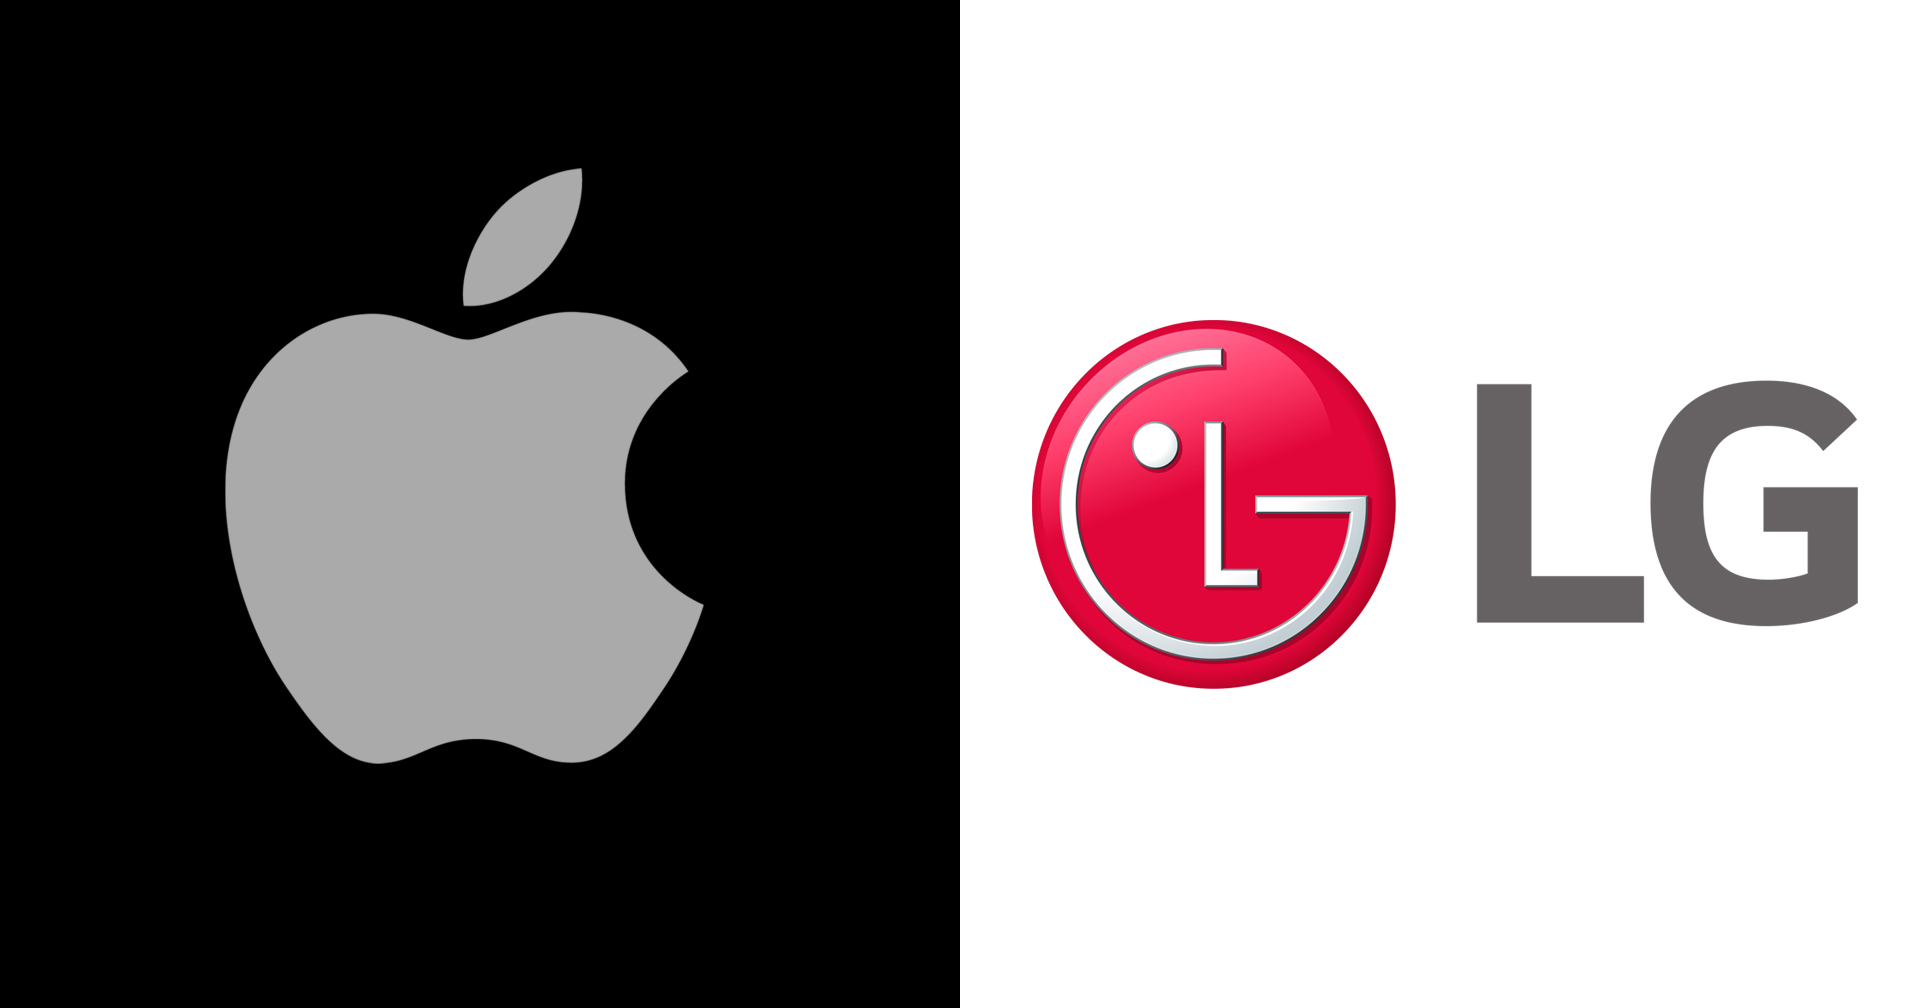 Apple จ่ายเงินมหาศาลเพื่อใช้สิทธิบัตร LG ในระยะยาว